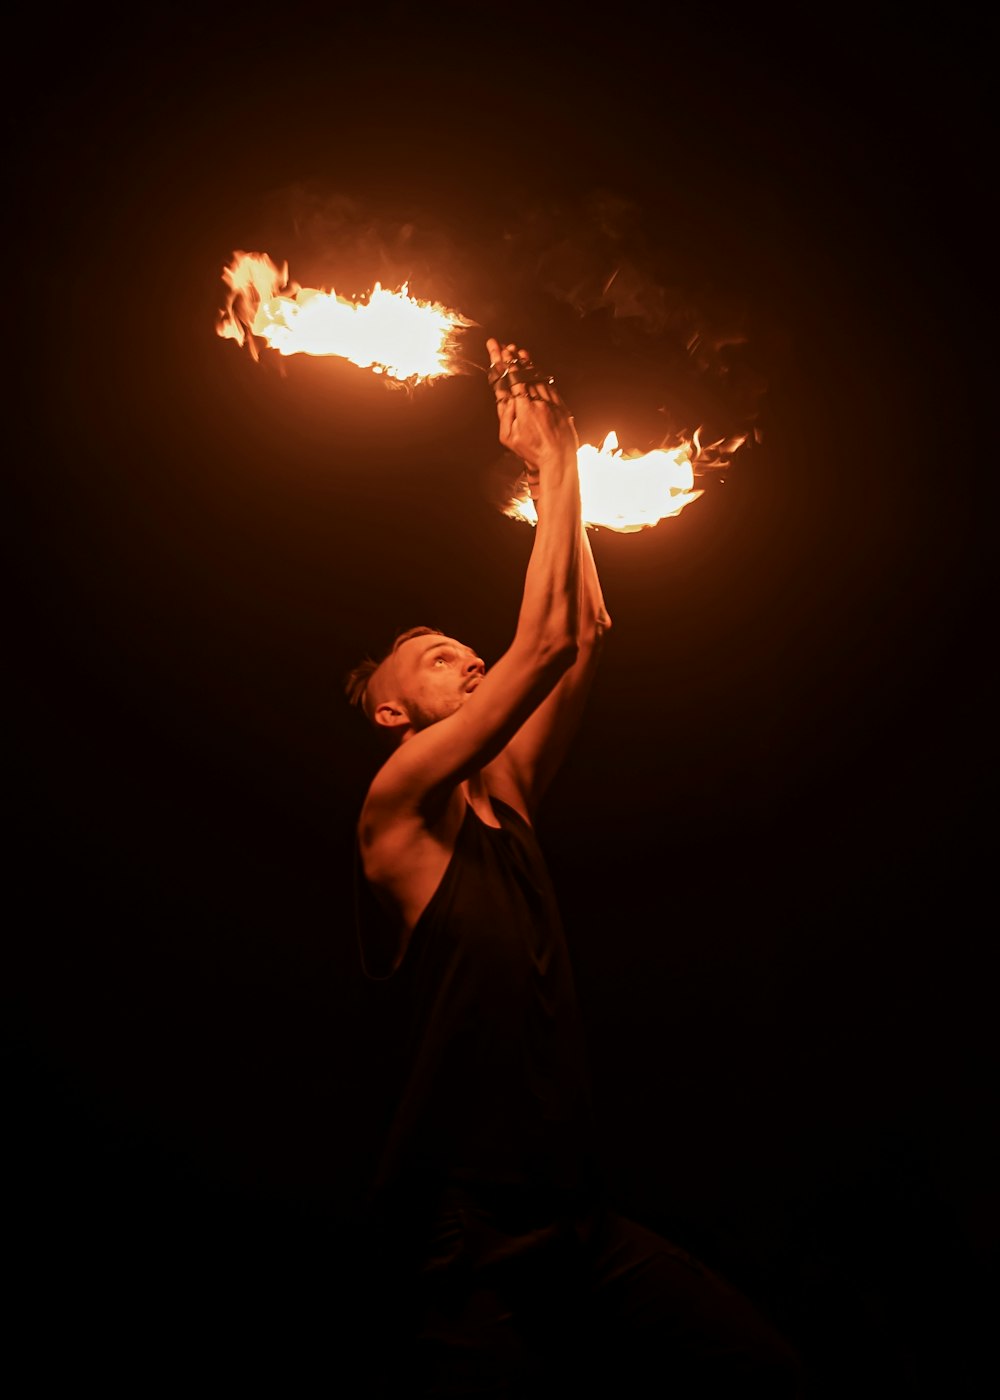 a man holding a fire stick in the dark